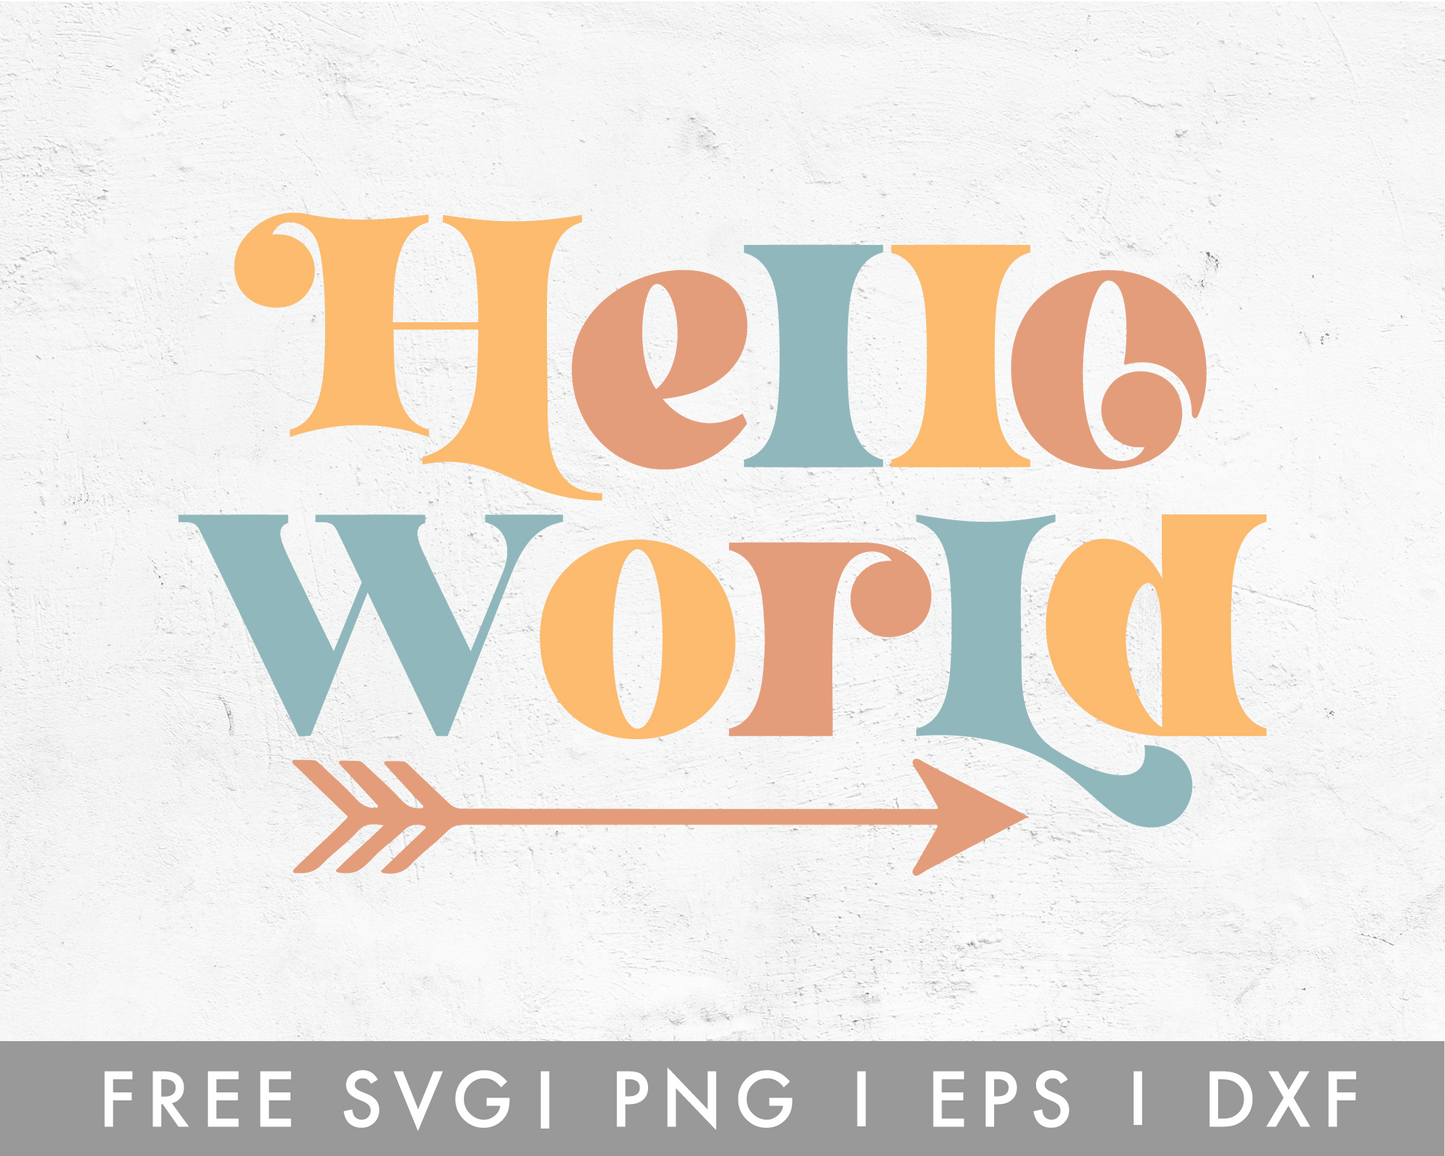 FREE Hello World SVG